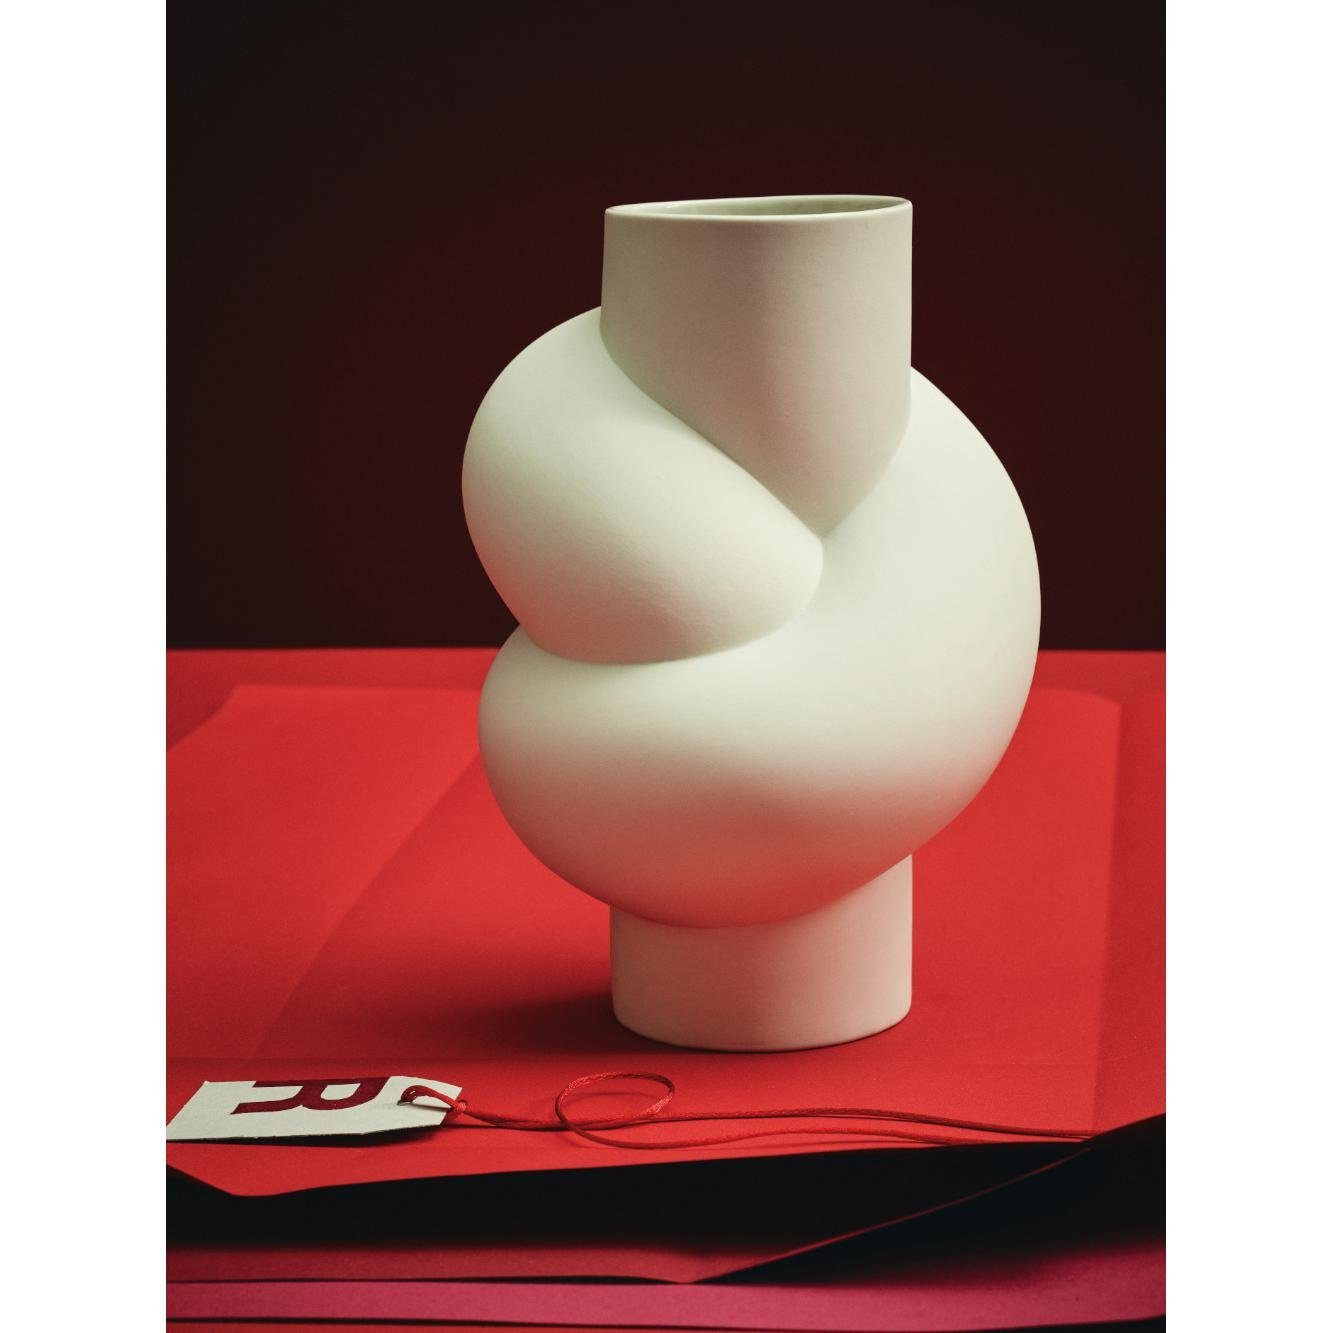 Node Rosenthal Dekovase (25cm) White Vase